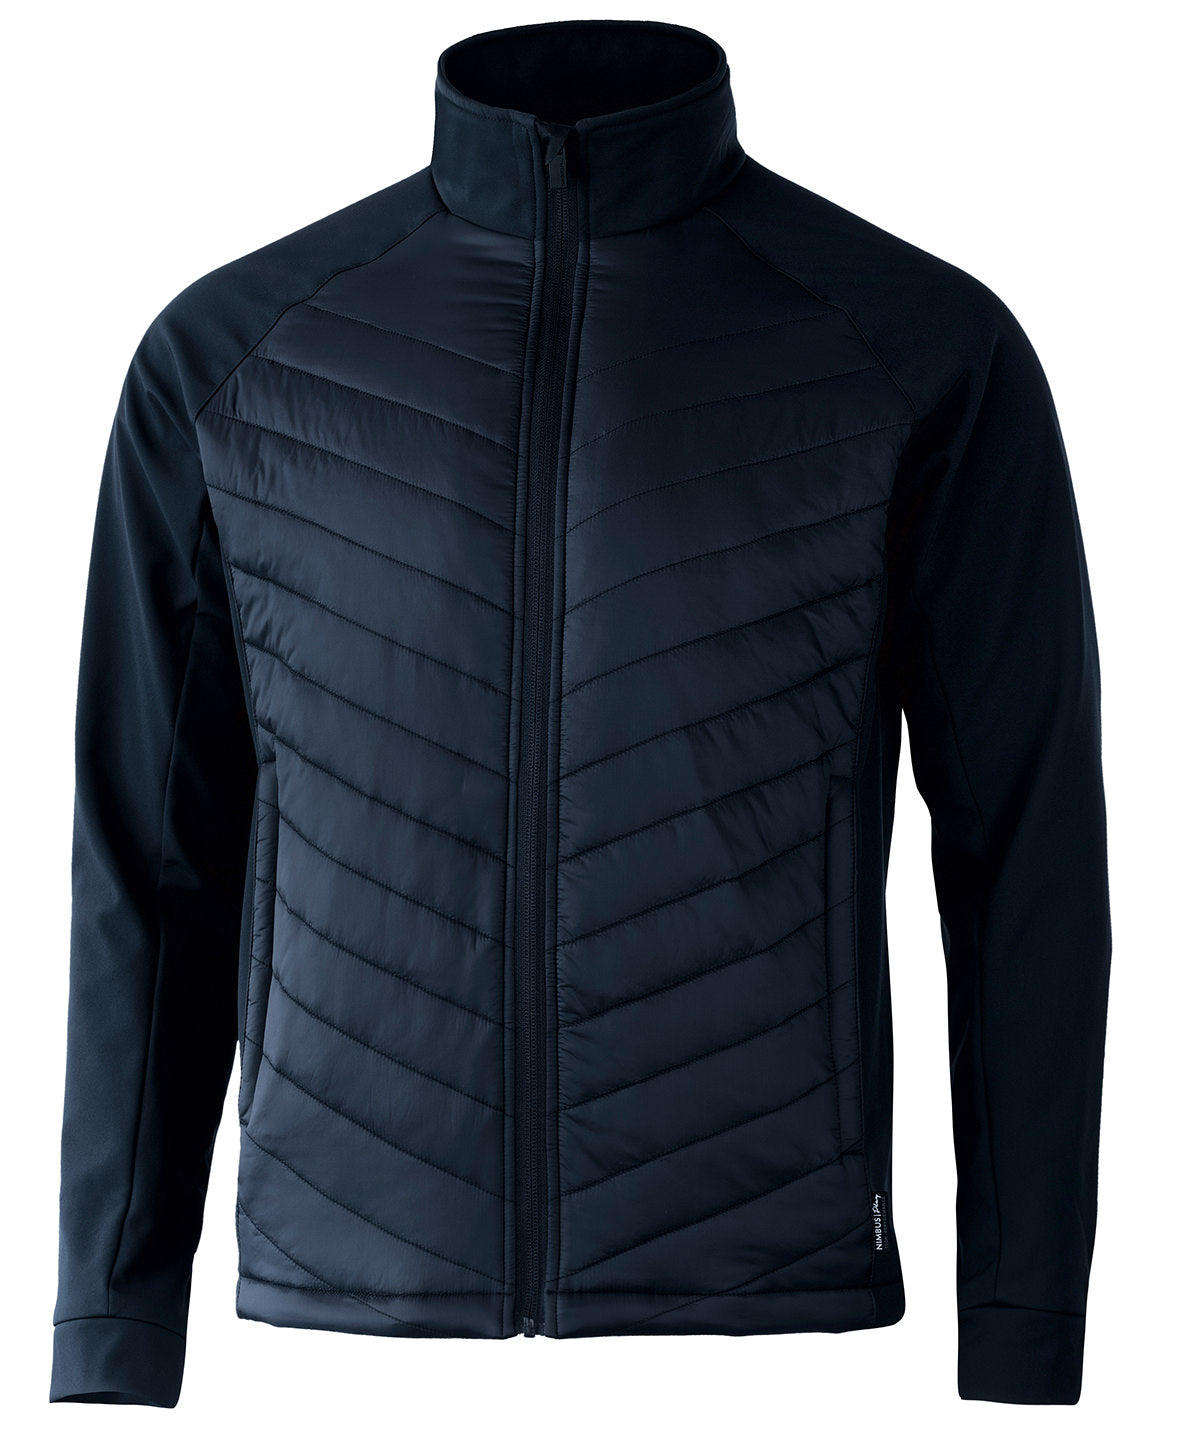 Jakkar - Bloomsdale – Comfortable Hybrid Jacket